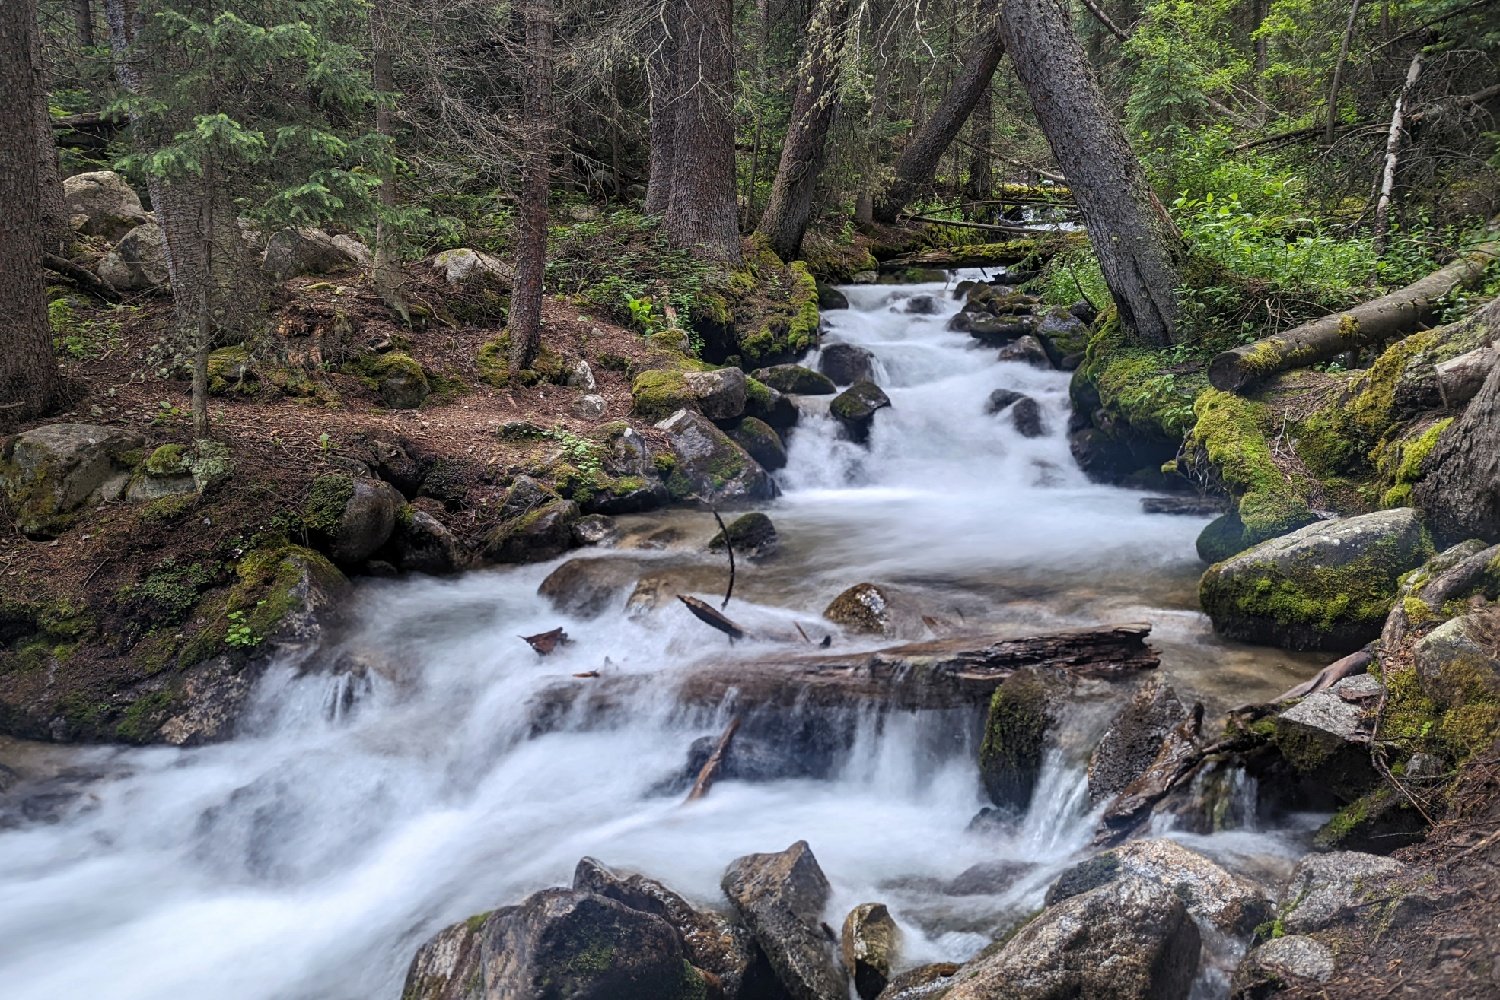 A cascade of water cutting through a forest